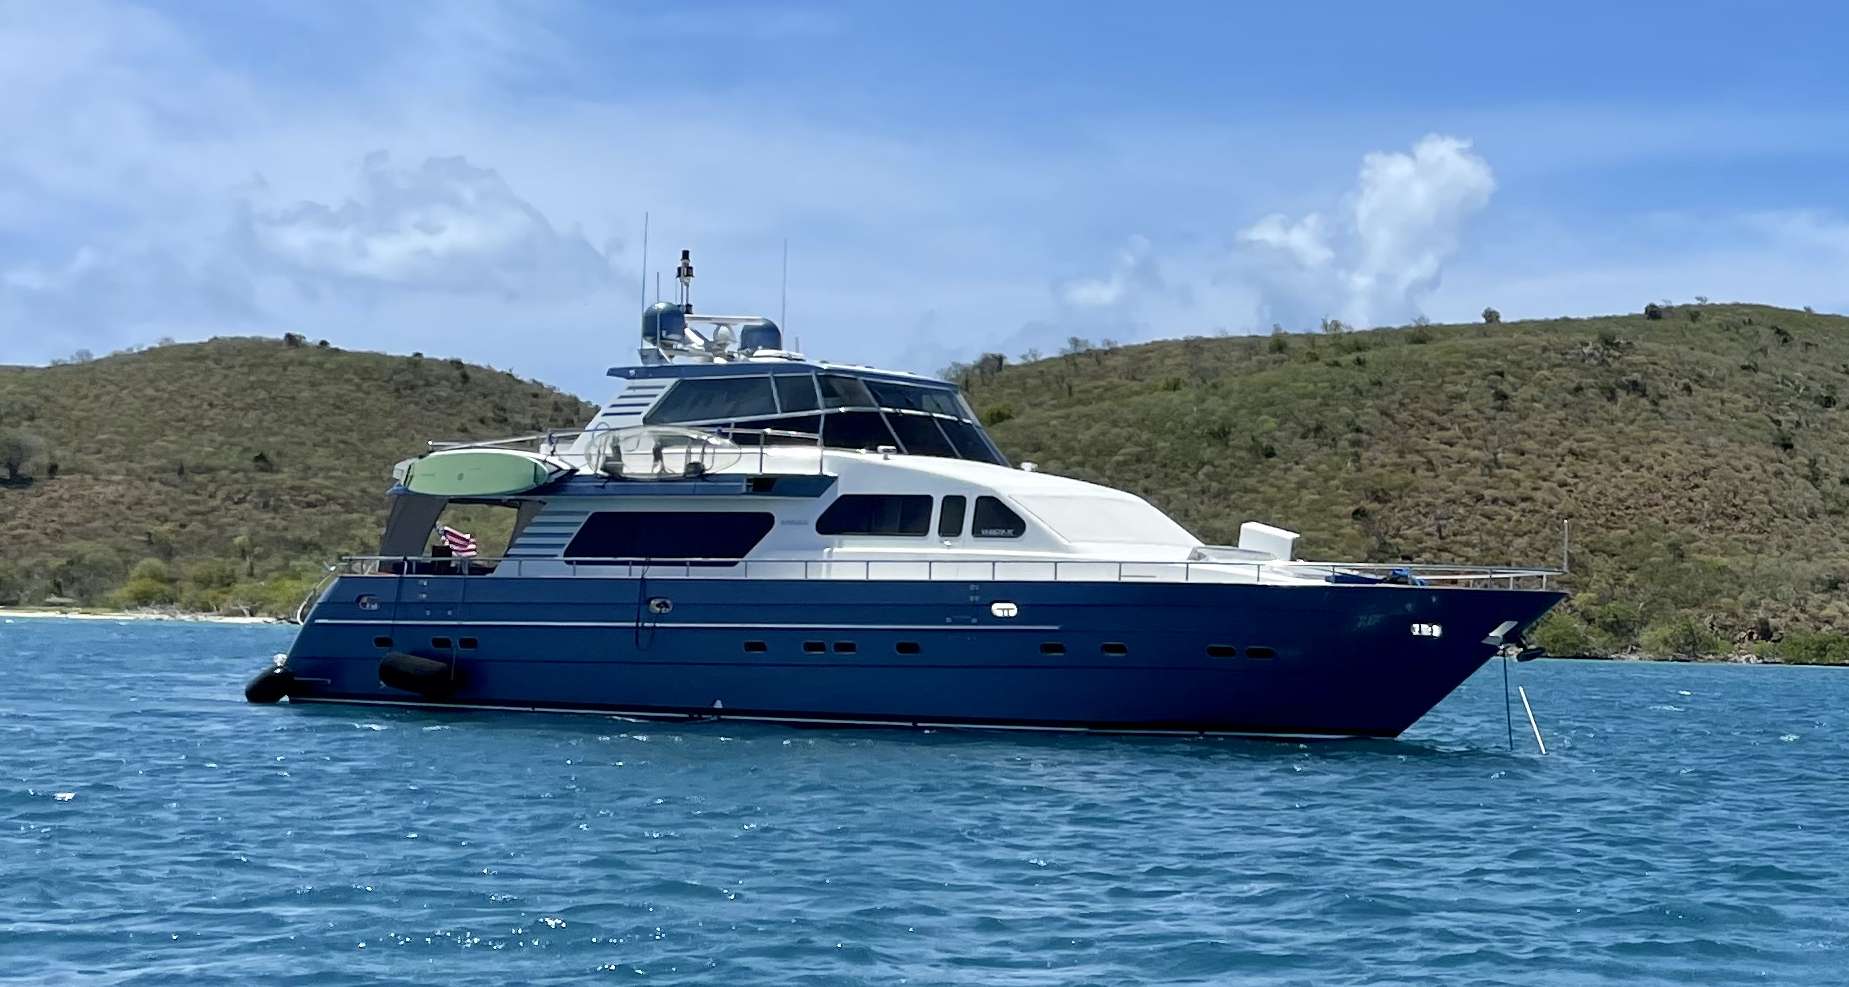 QARA - Superyacht charter St Maarten & Boat hire in Caribbean 1